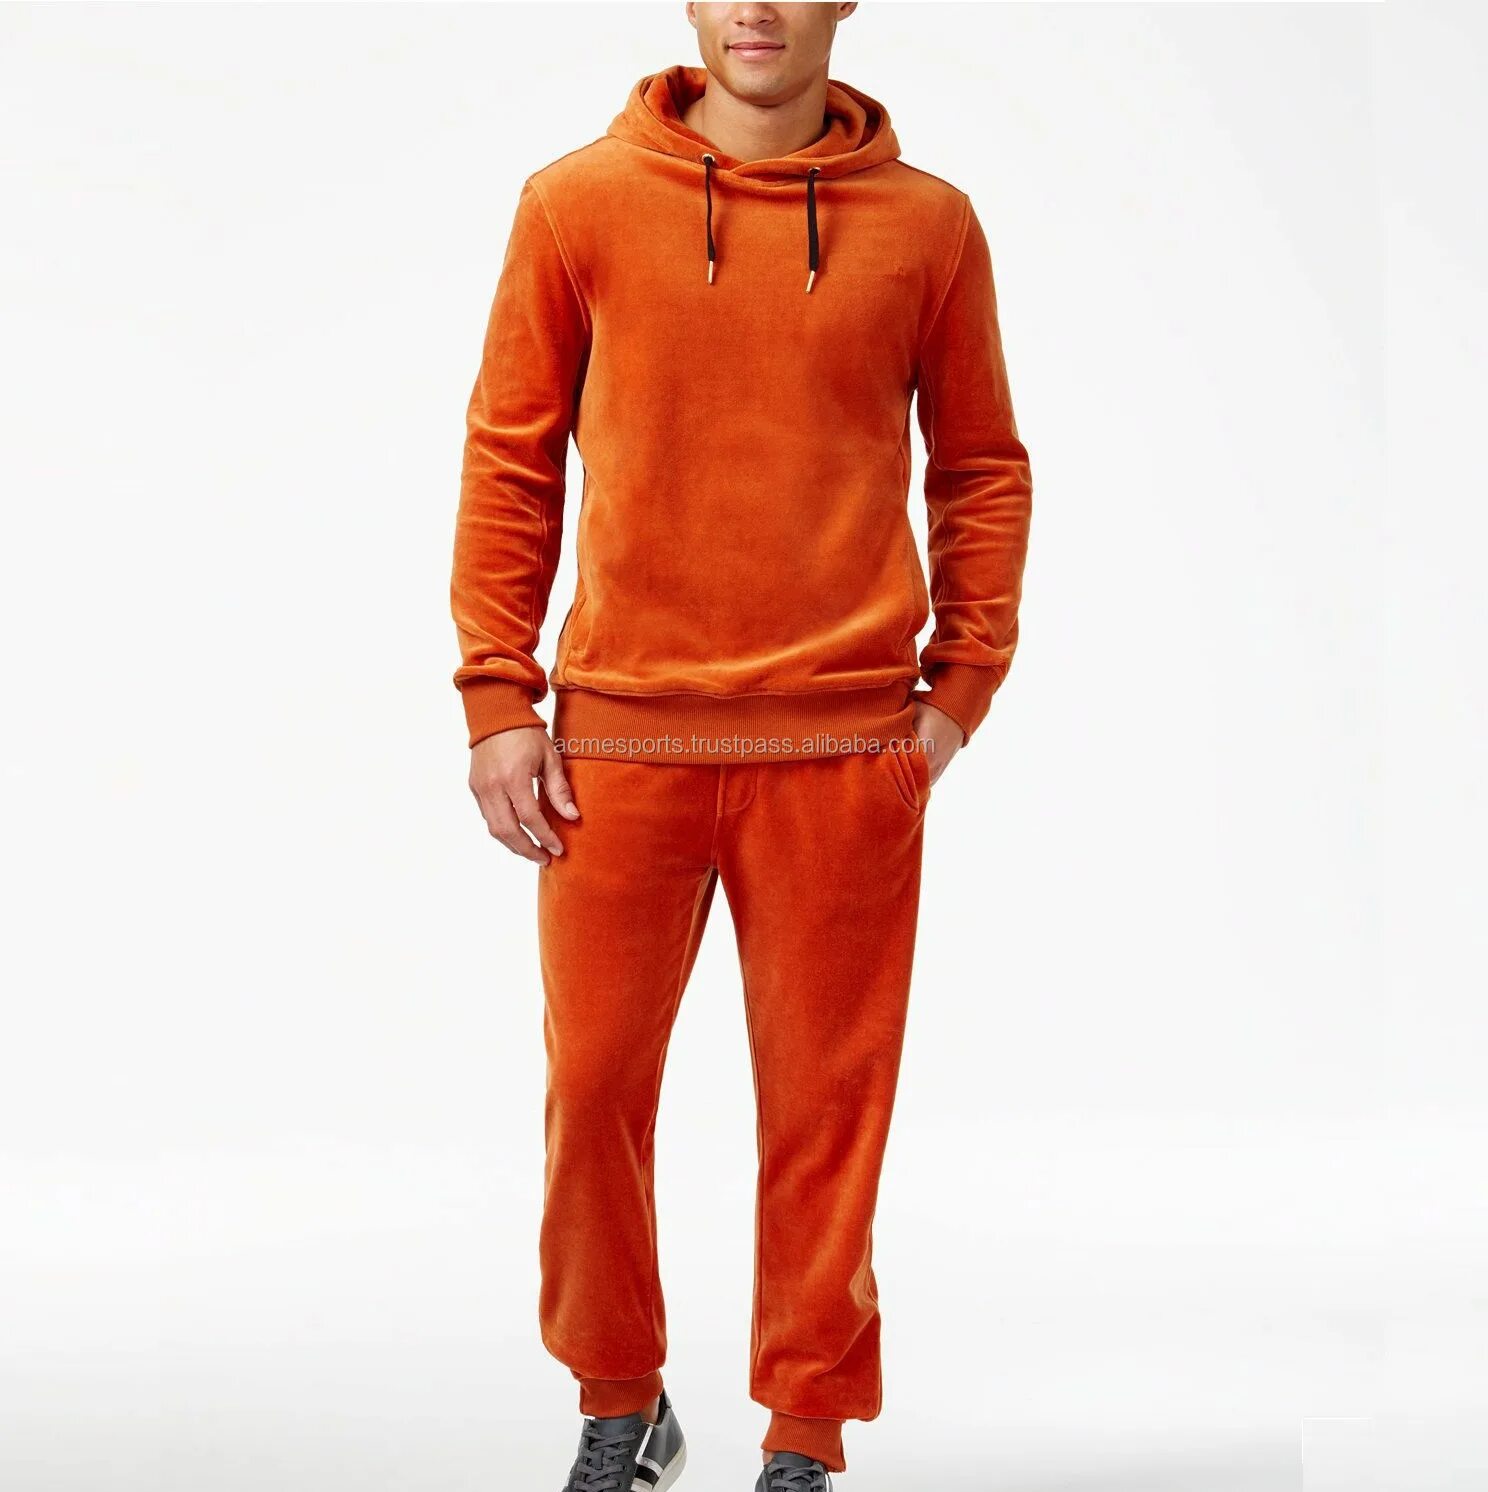 Велюровый спортивный костюм мужской Sean John. Sean John спортивный костюм. Оранжевый спортивный костюм мужской адидас. Велюровый костюм адидас мужской.